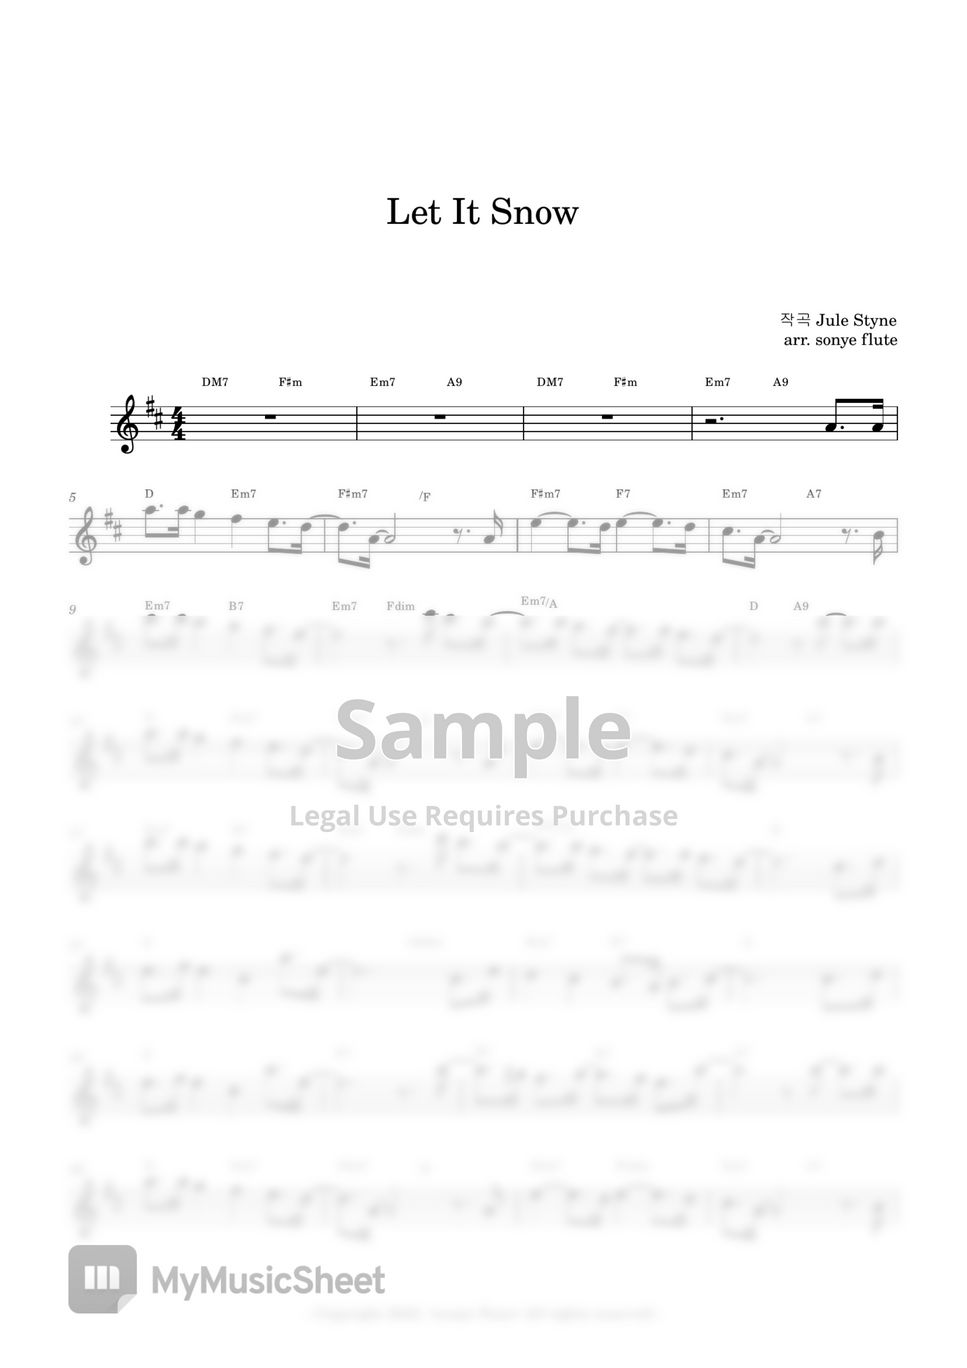 Christmas Carol - Let it Snow, Let It Snow, Let It Snow (Flute Sheet Music) by sonye flute